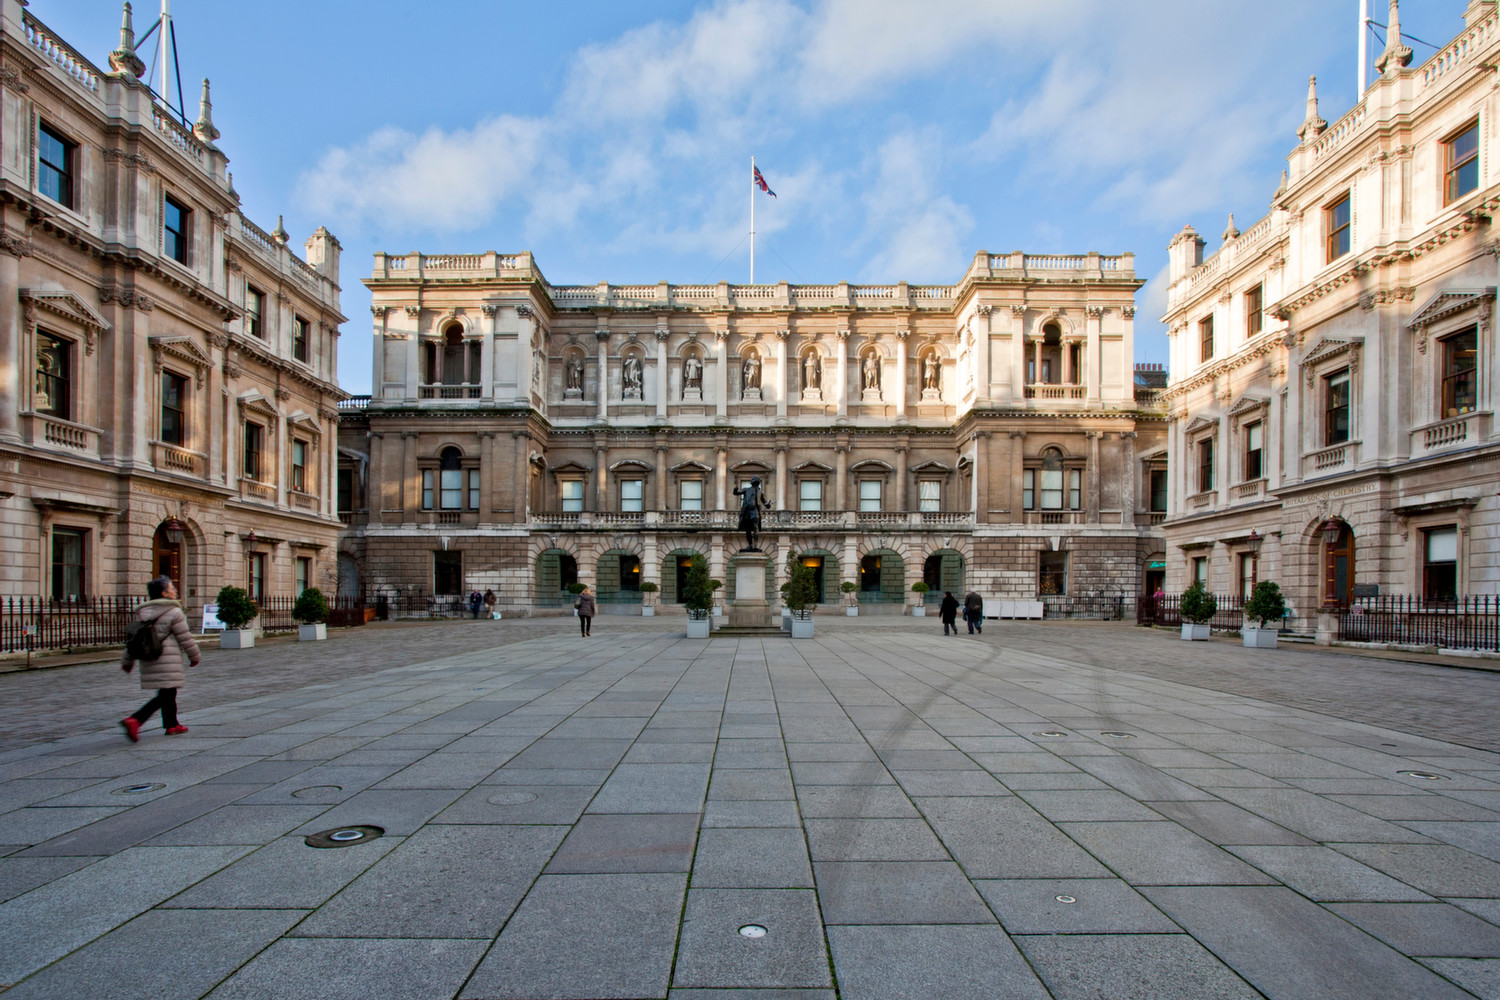 Royal academy of arts